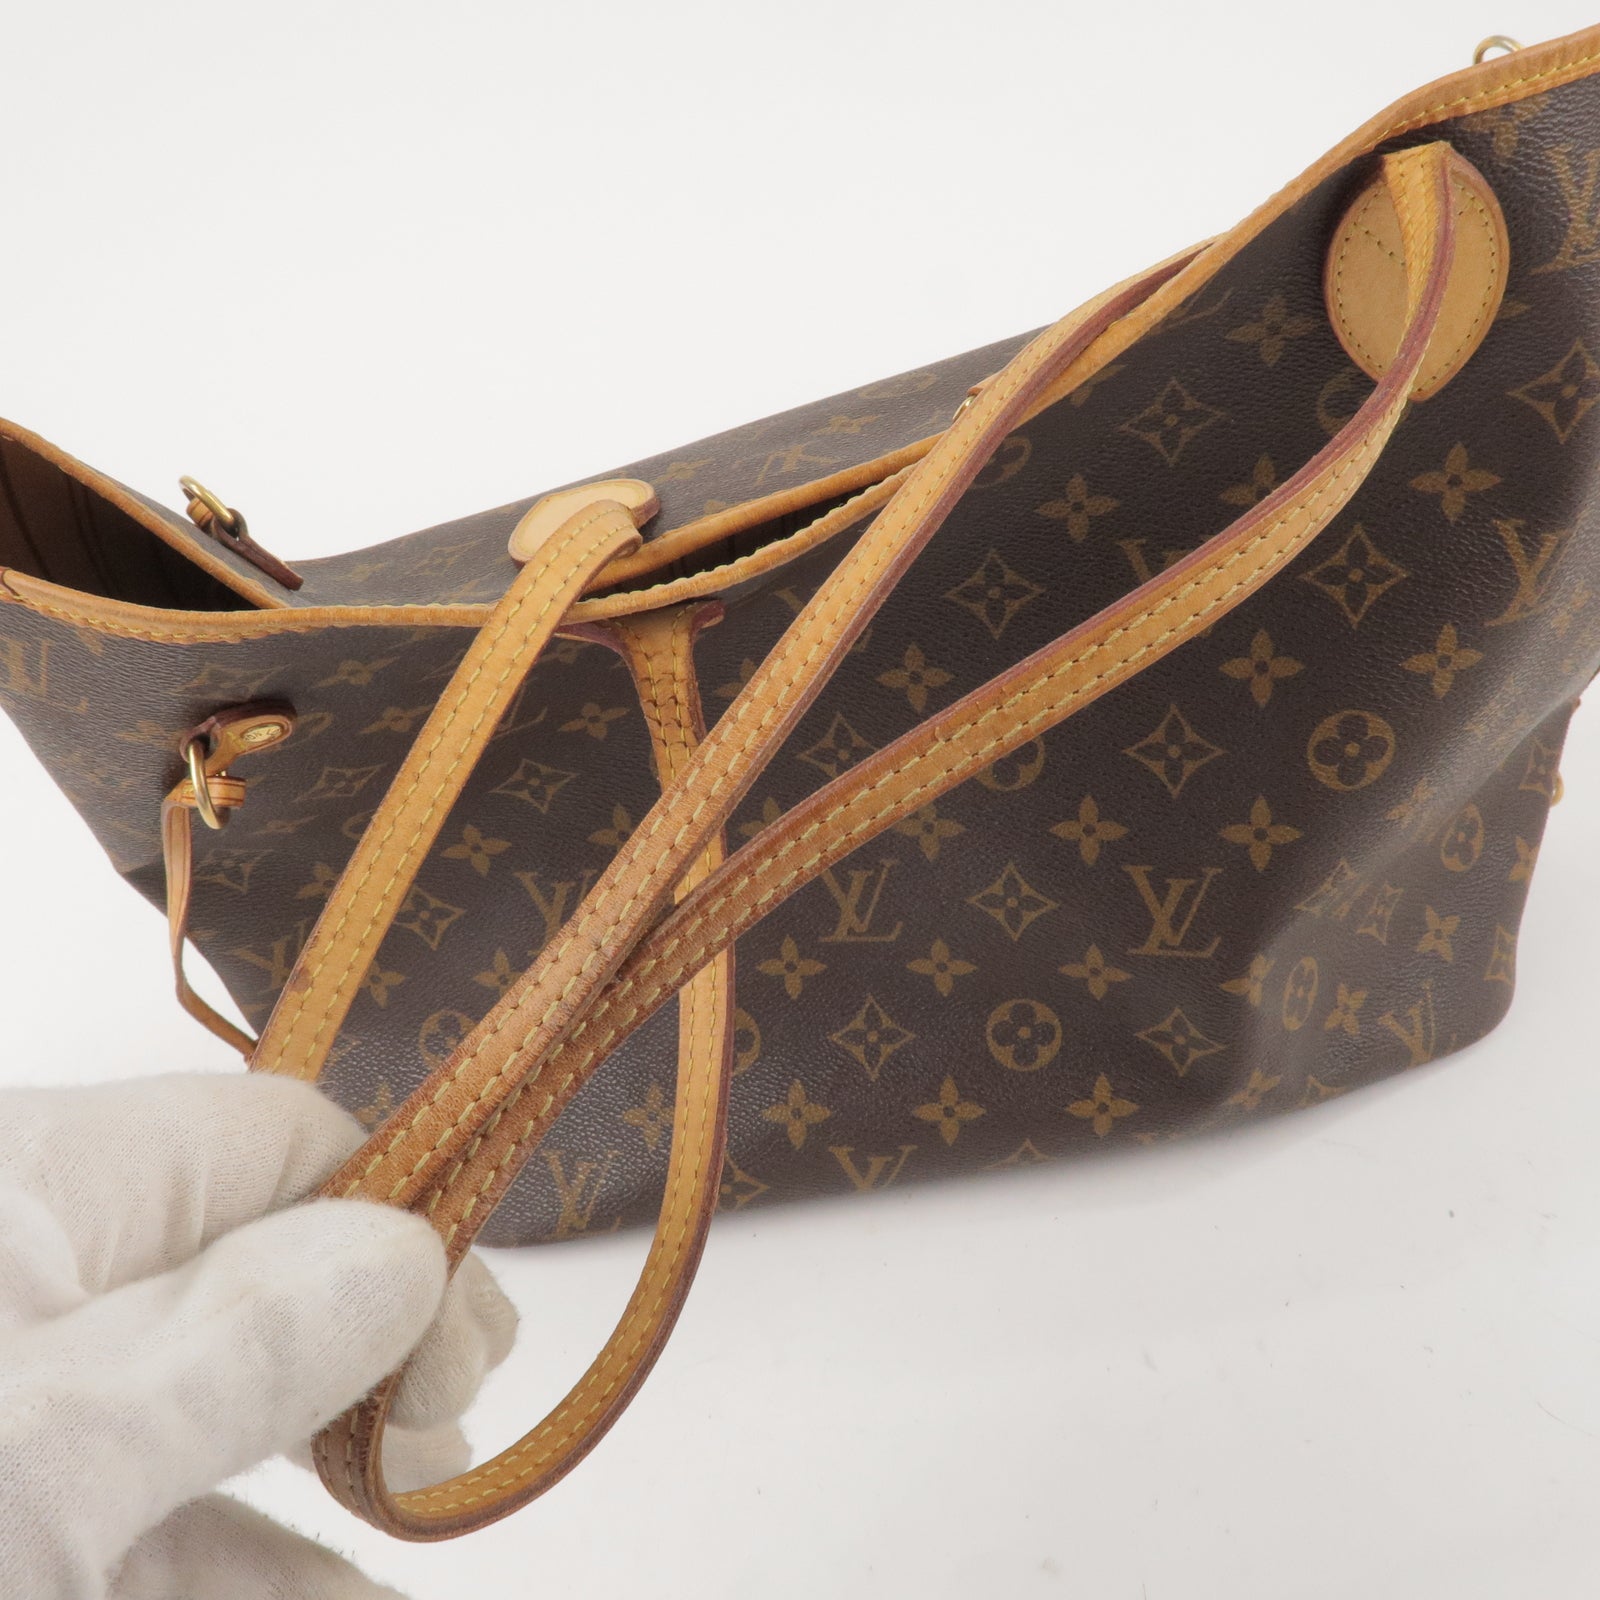 Authentic Louis Vuitton Neverfull MM Monogram Tote Bag M40156